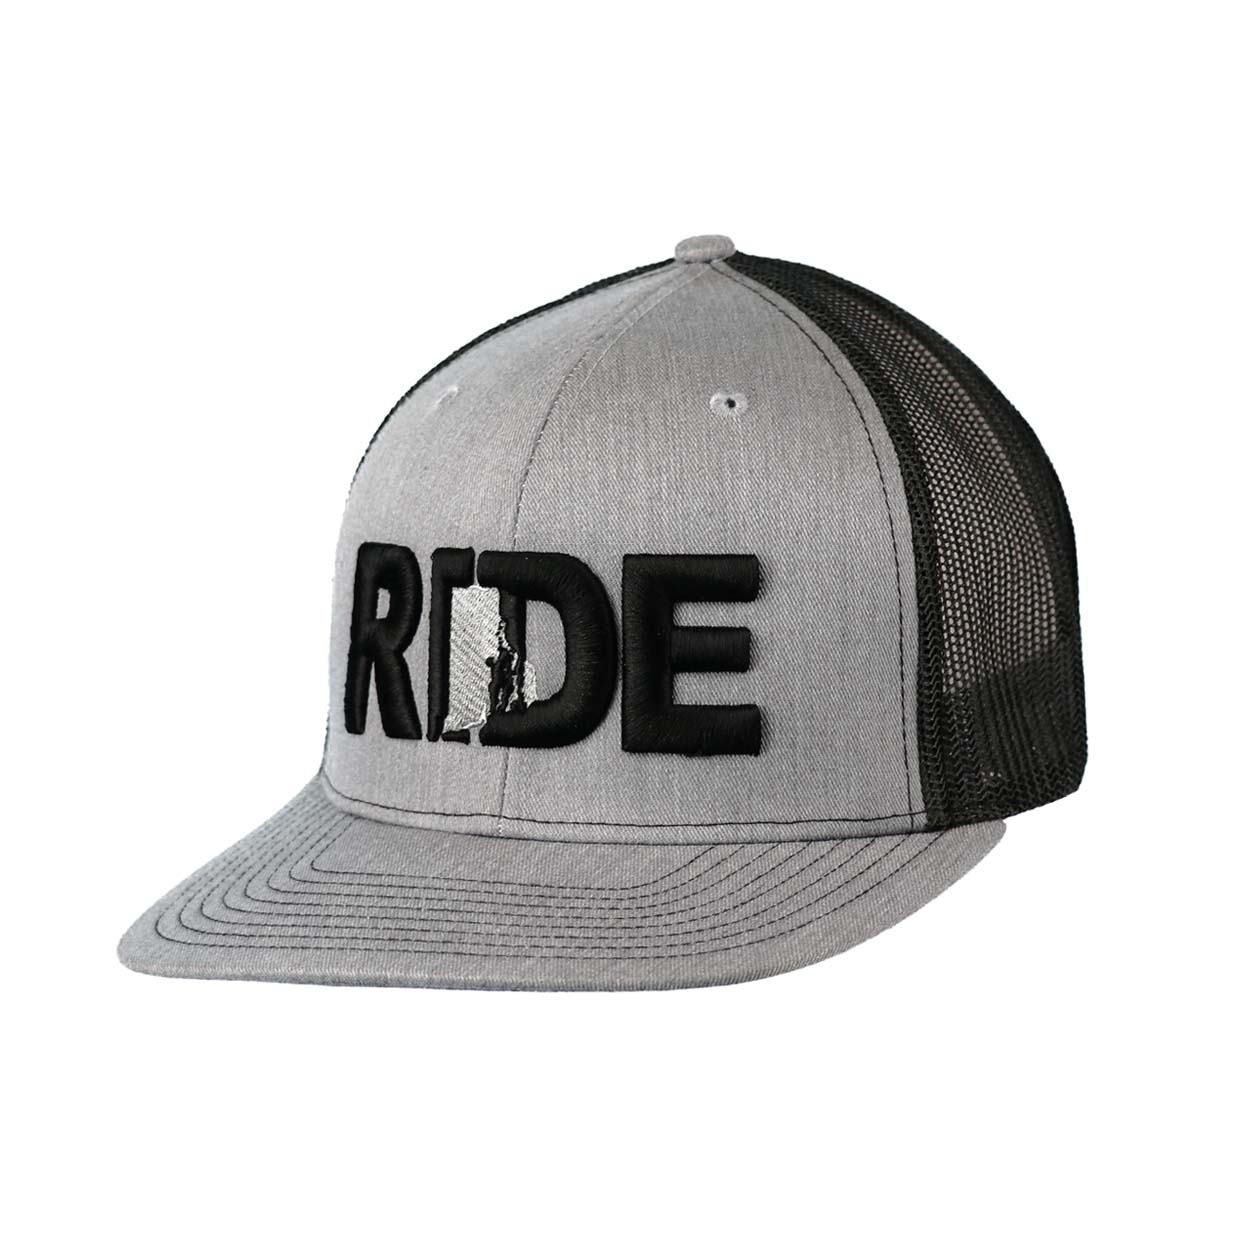 Ride Rhode Island Classic Pro 3D Puff Embroidered Snapback Trucker Hat Heather Gray/Black